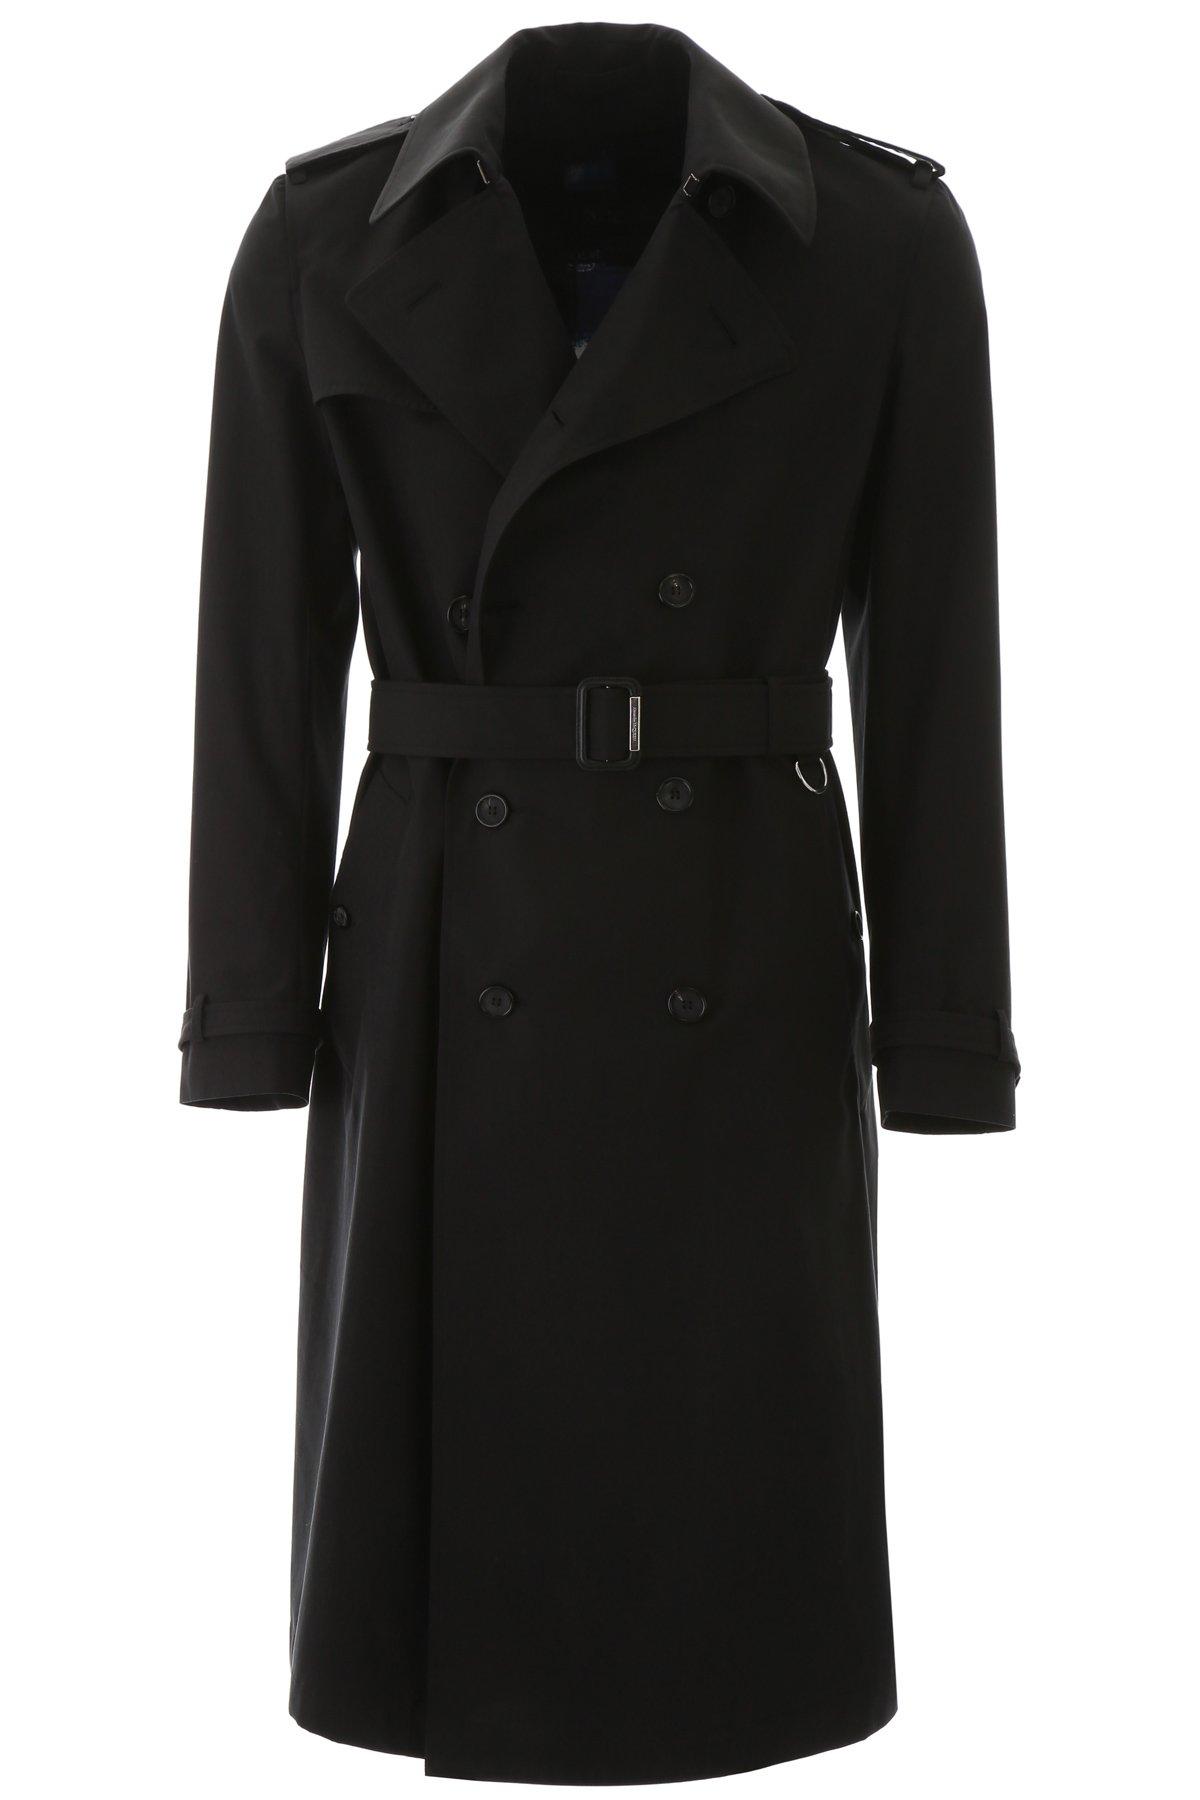 Alexander McQueen Cotton Trench Coat in Black for Men - Save 9% - Lyst